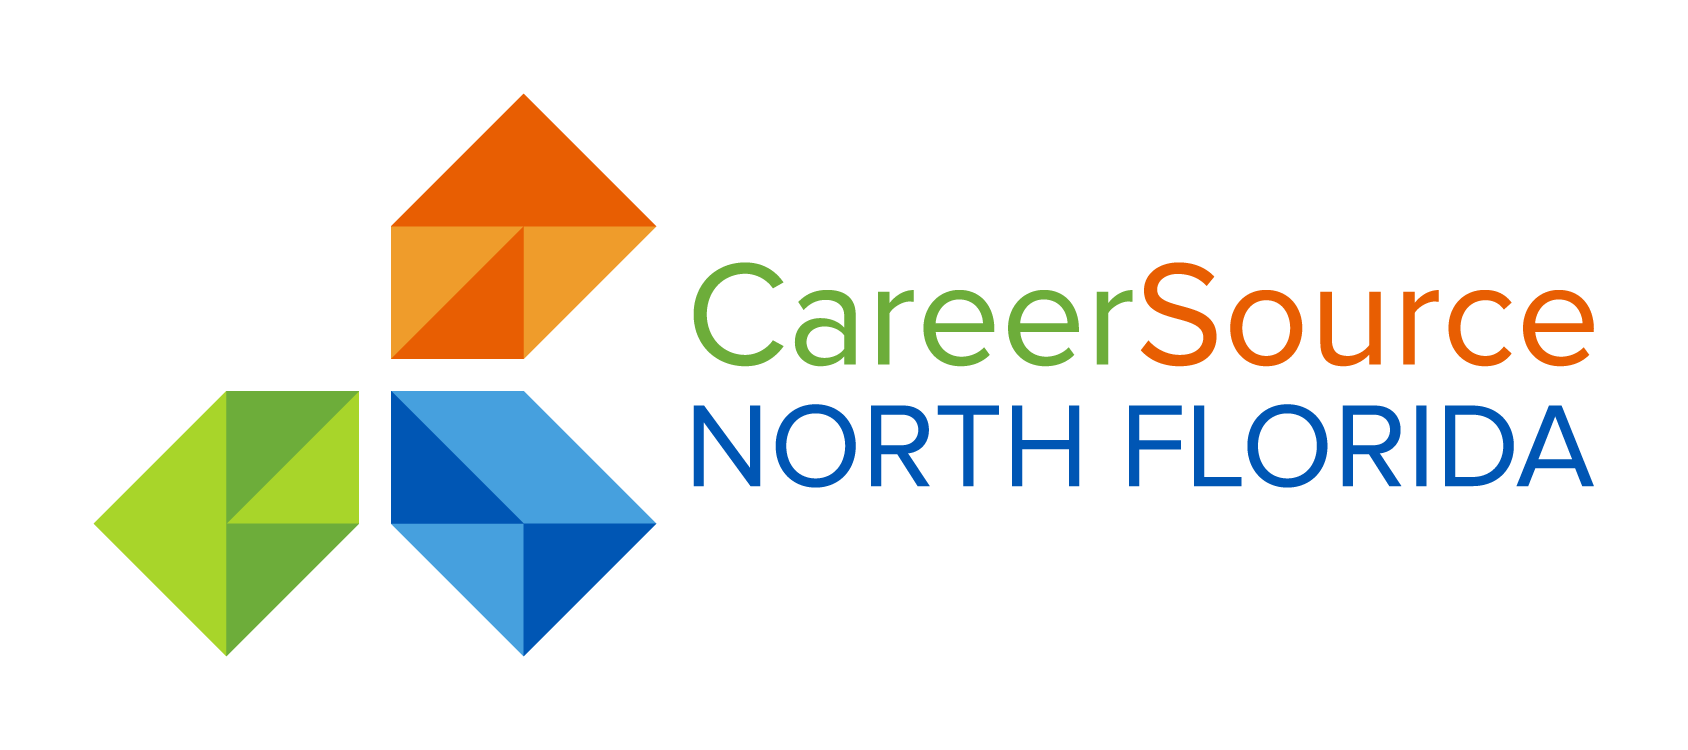 CareerSource North Florida logo